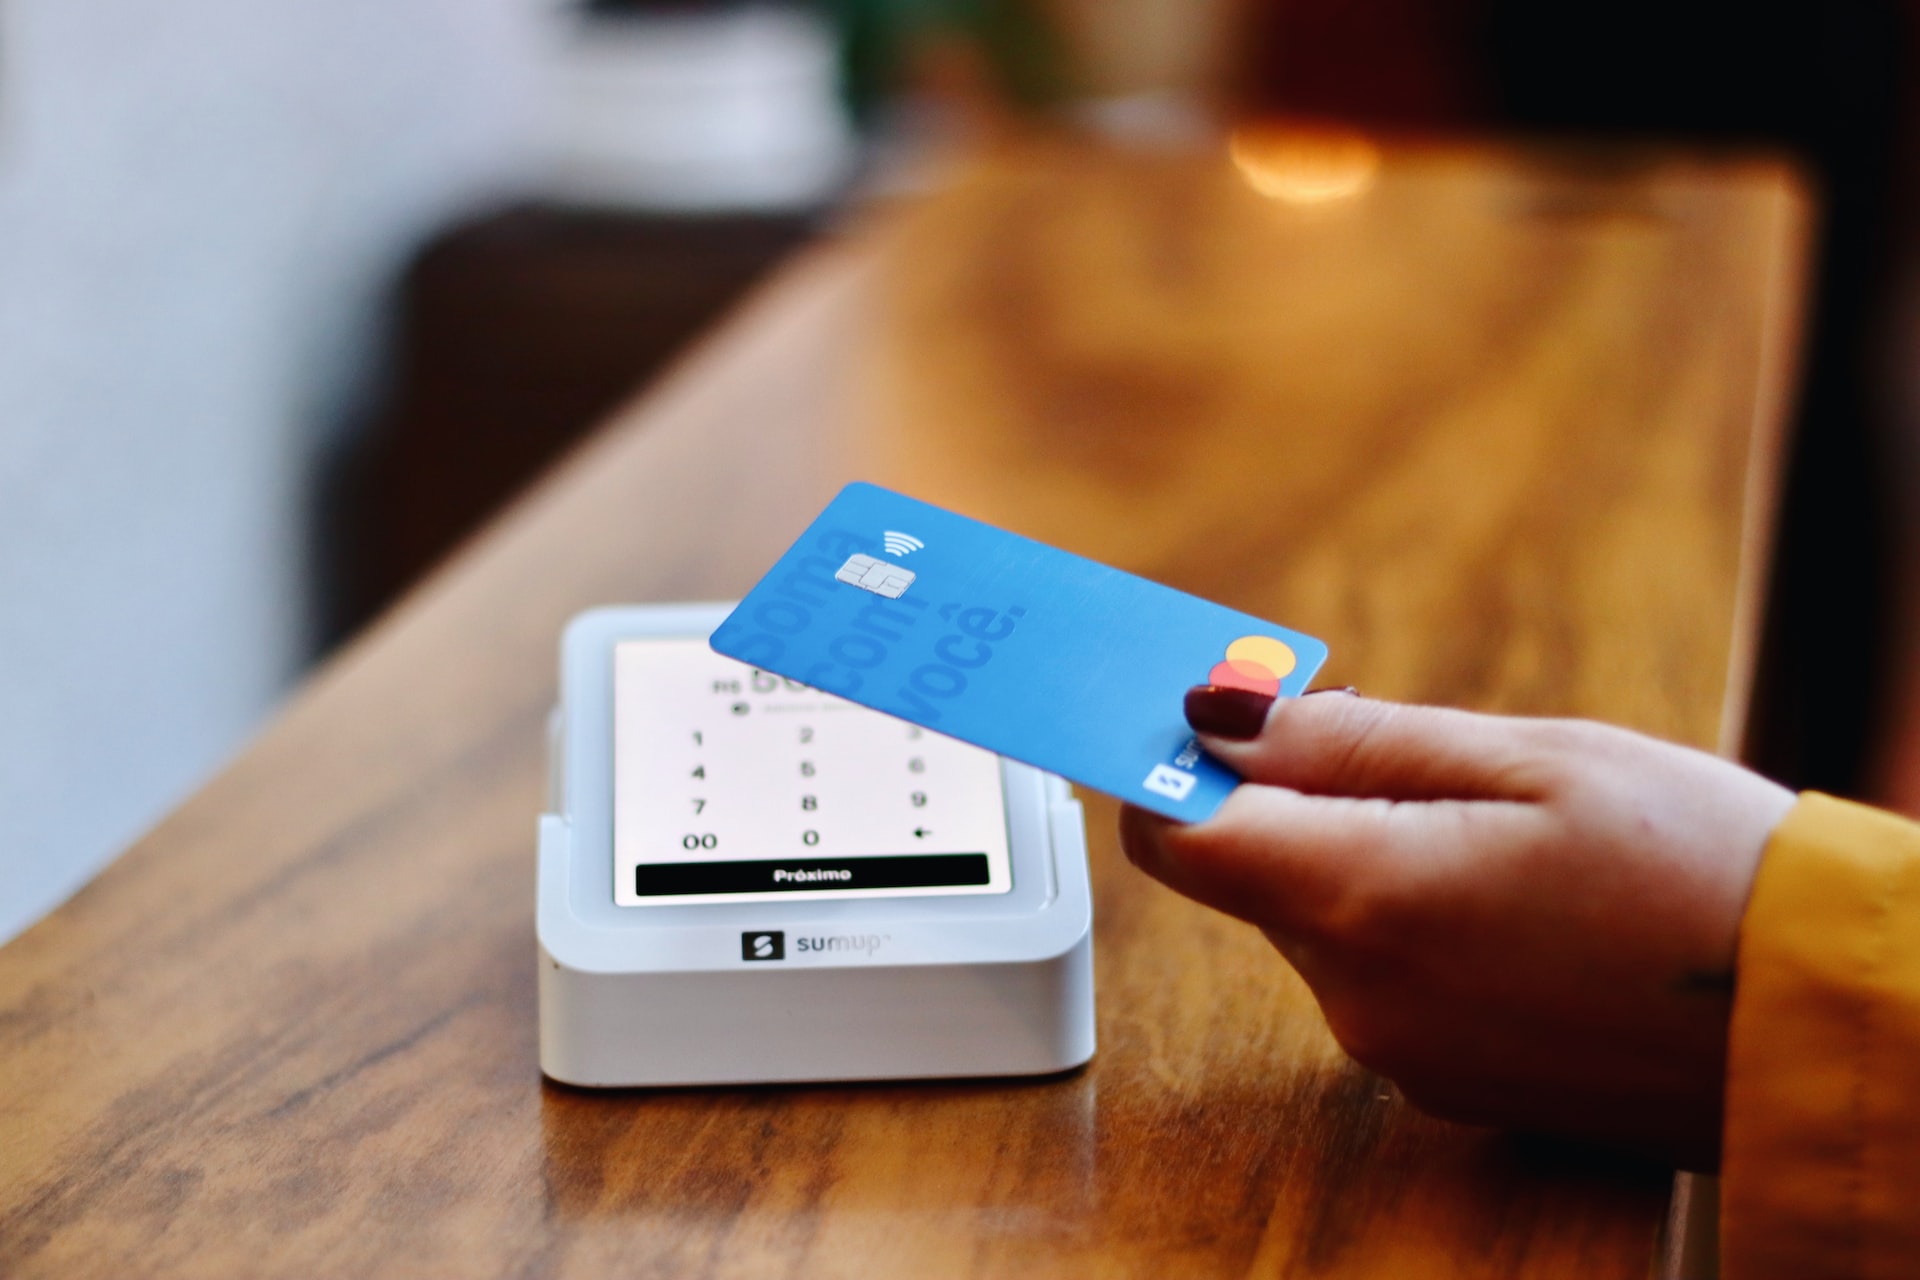 Buy Kunci With Debit Card